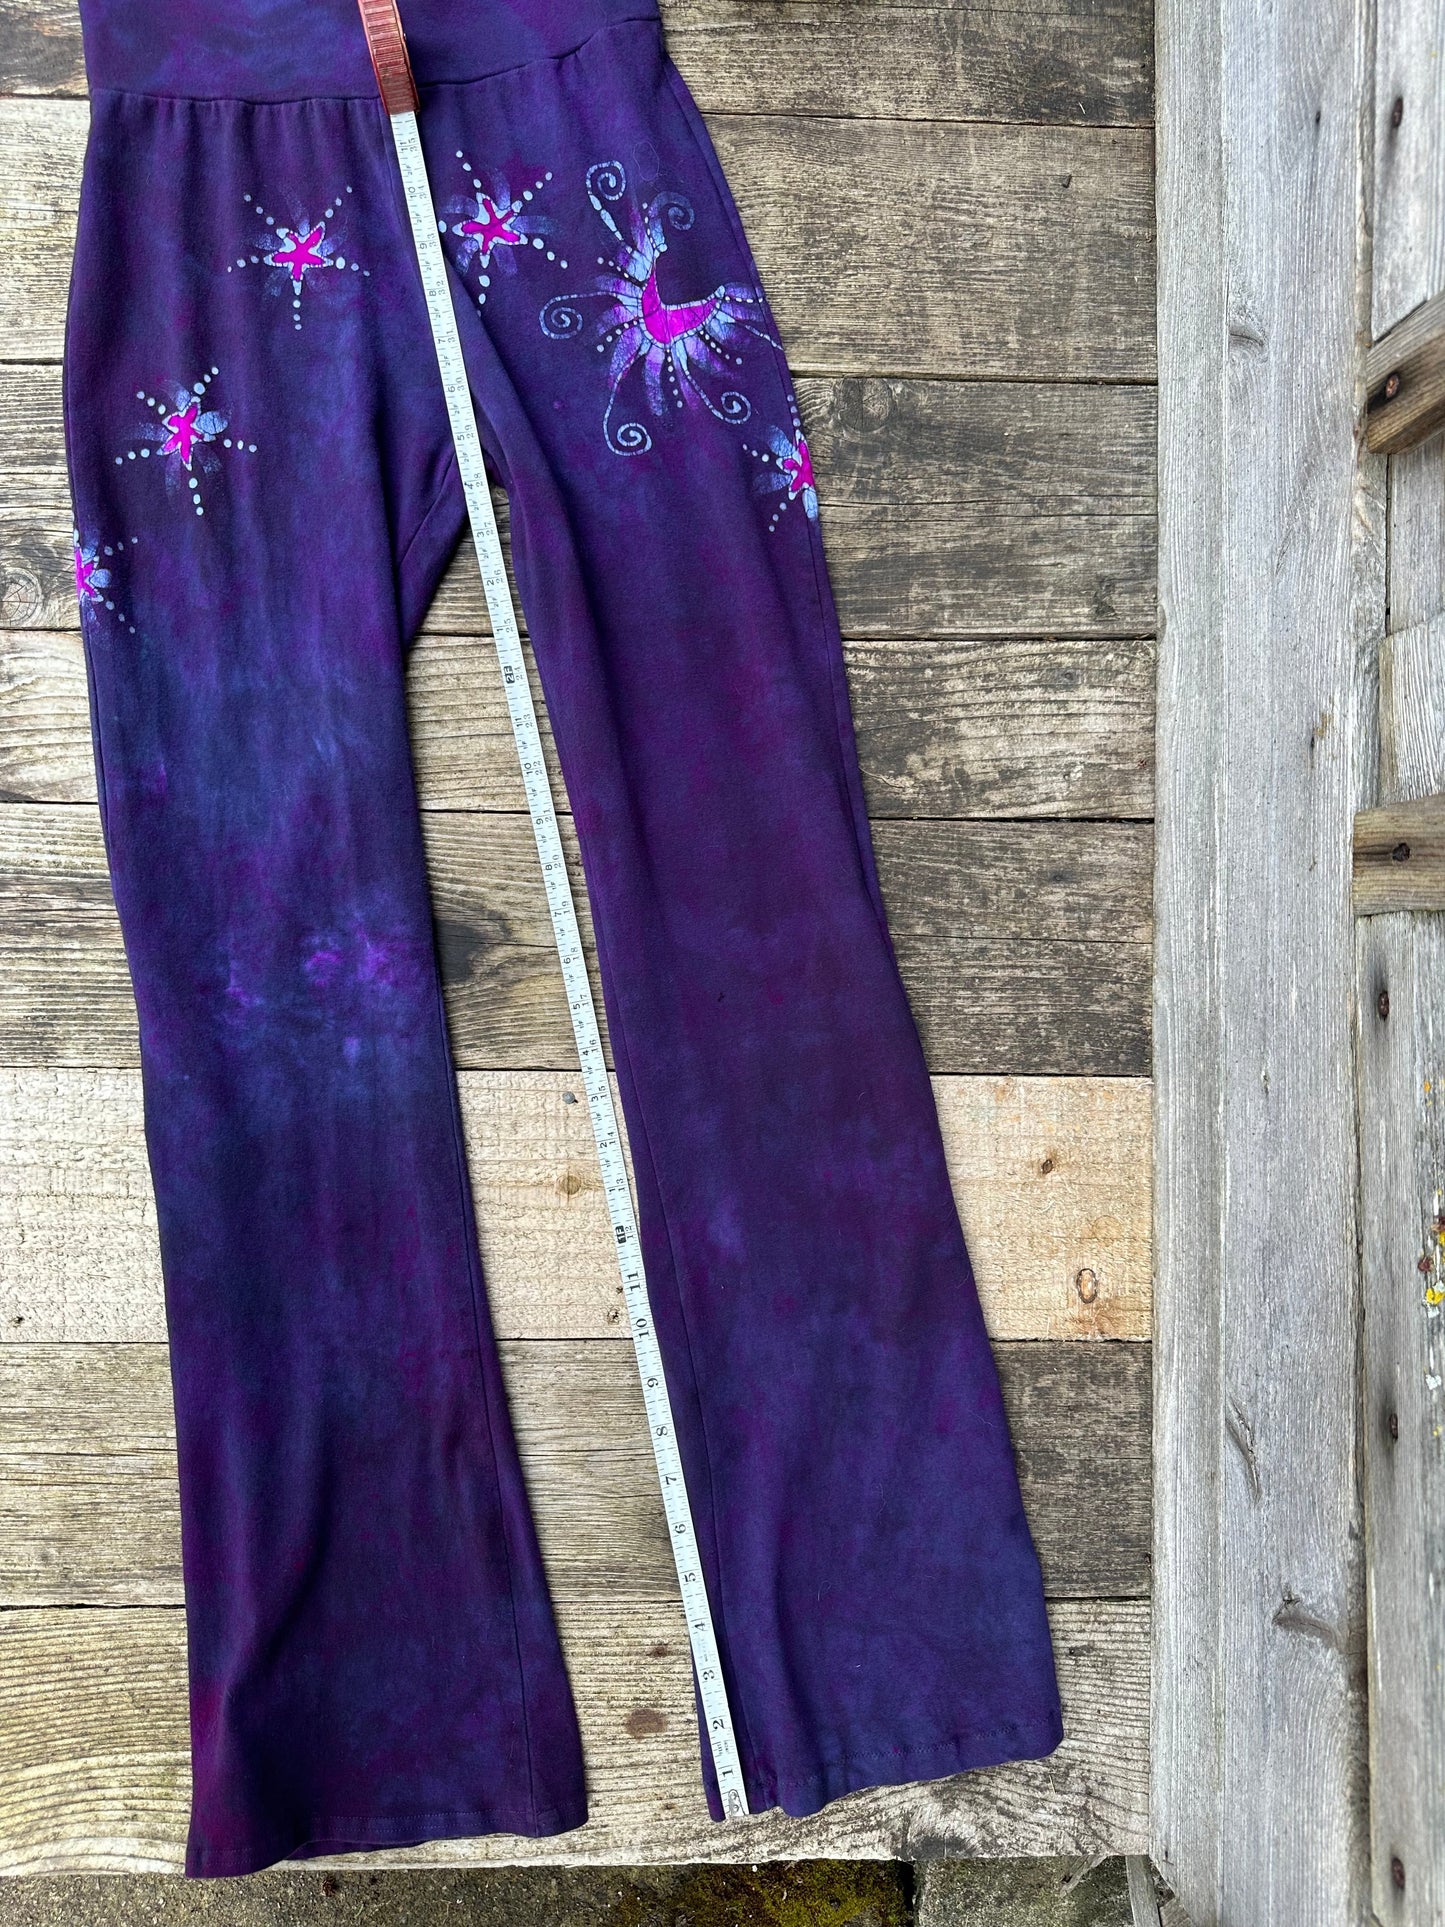 Purple Passion Moonflower Stars Stretchy Yoga Pants Size Small Long Yoga Pants batikwalla 